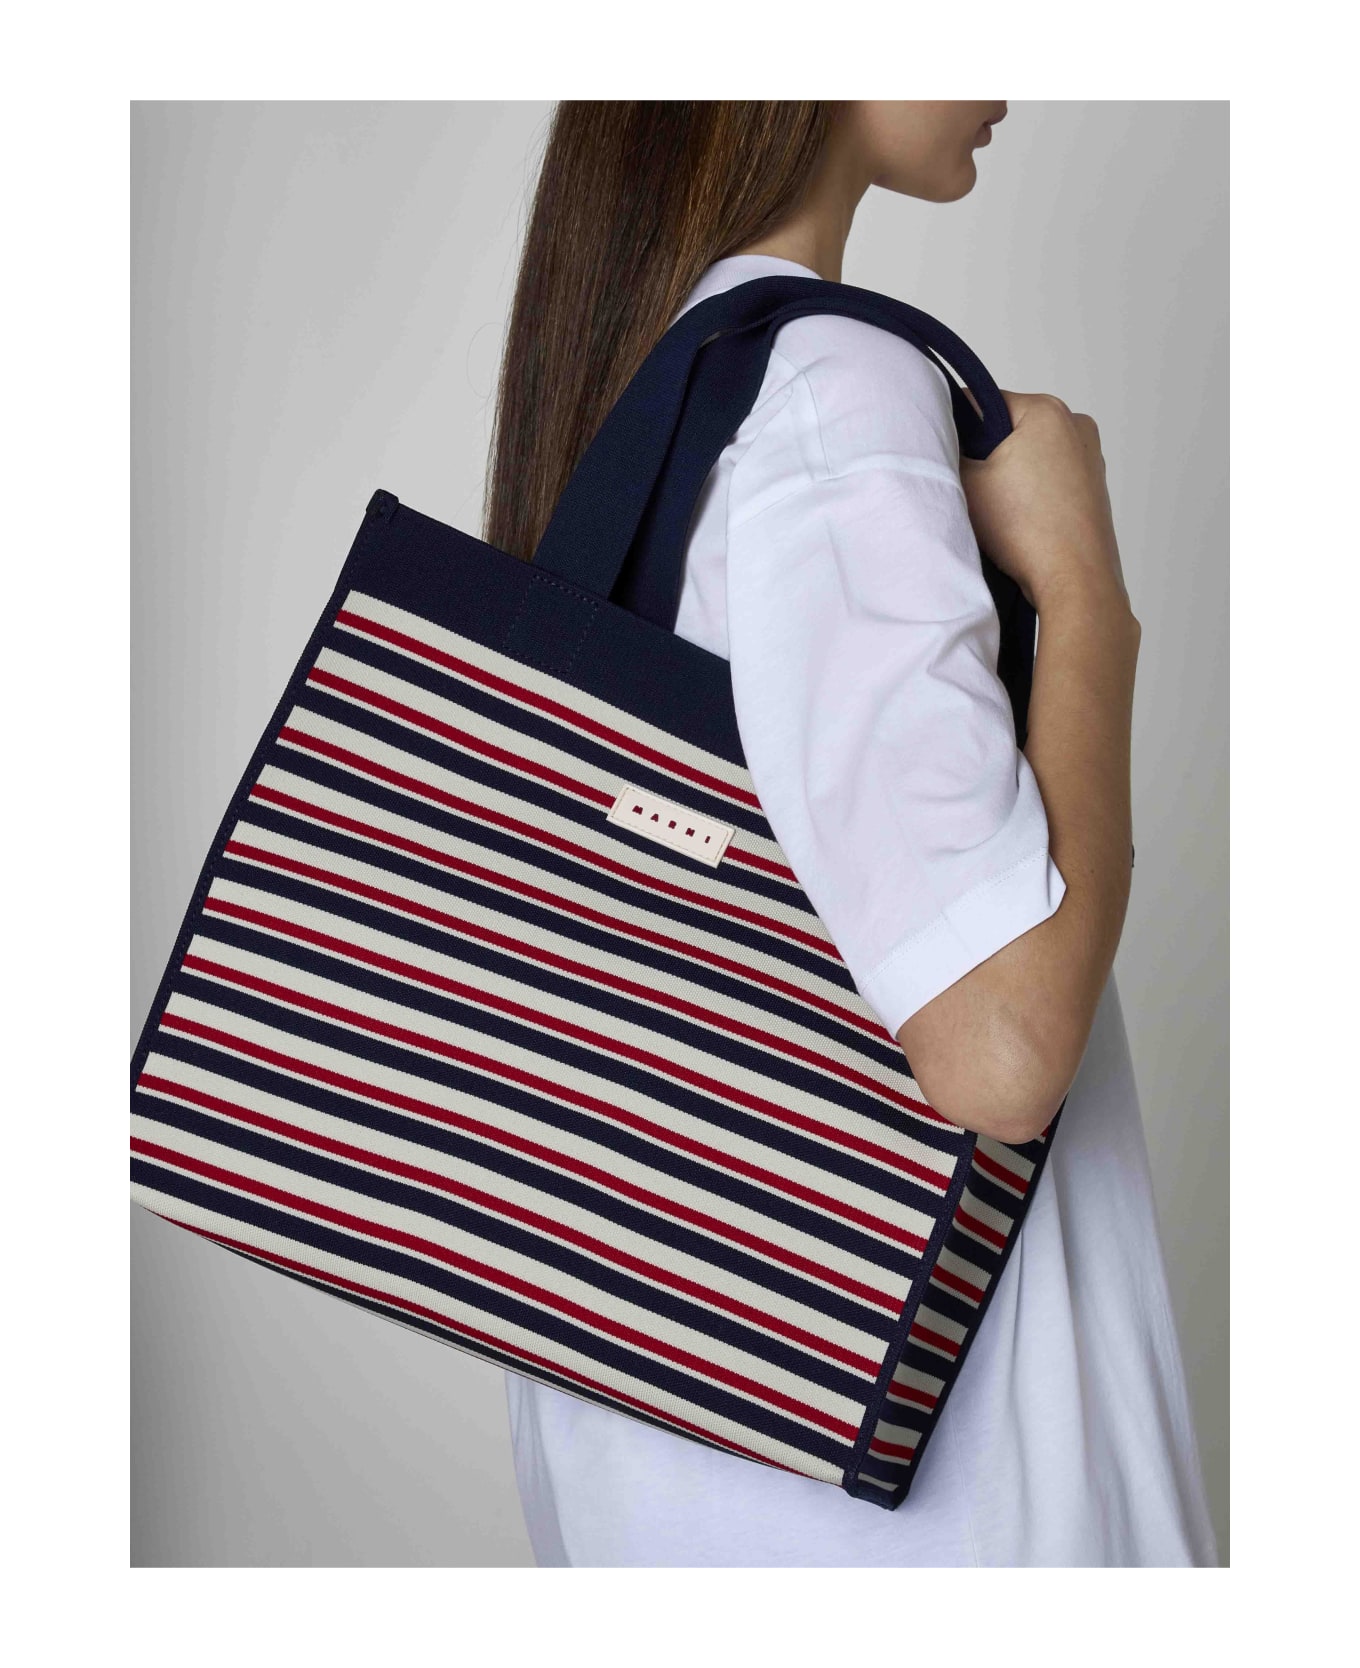 Marni Striped Canvas Medium Shopping Bag - Marine/ivory/red